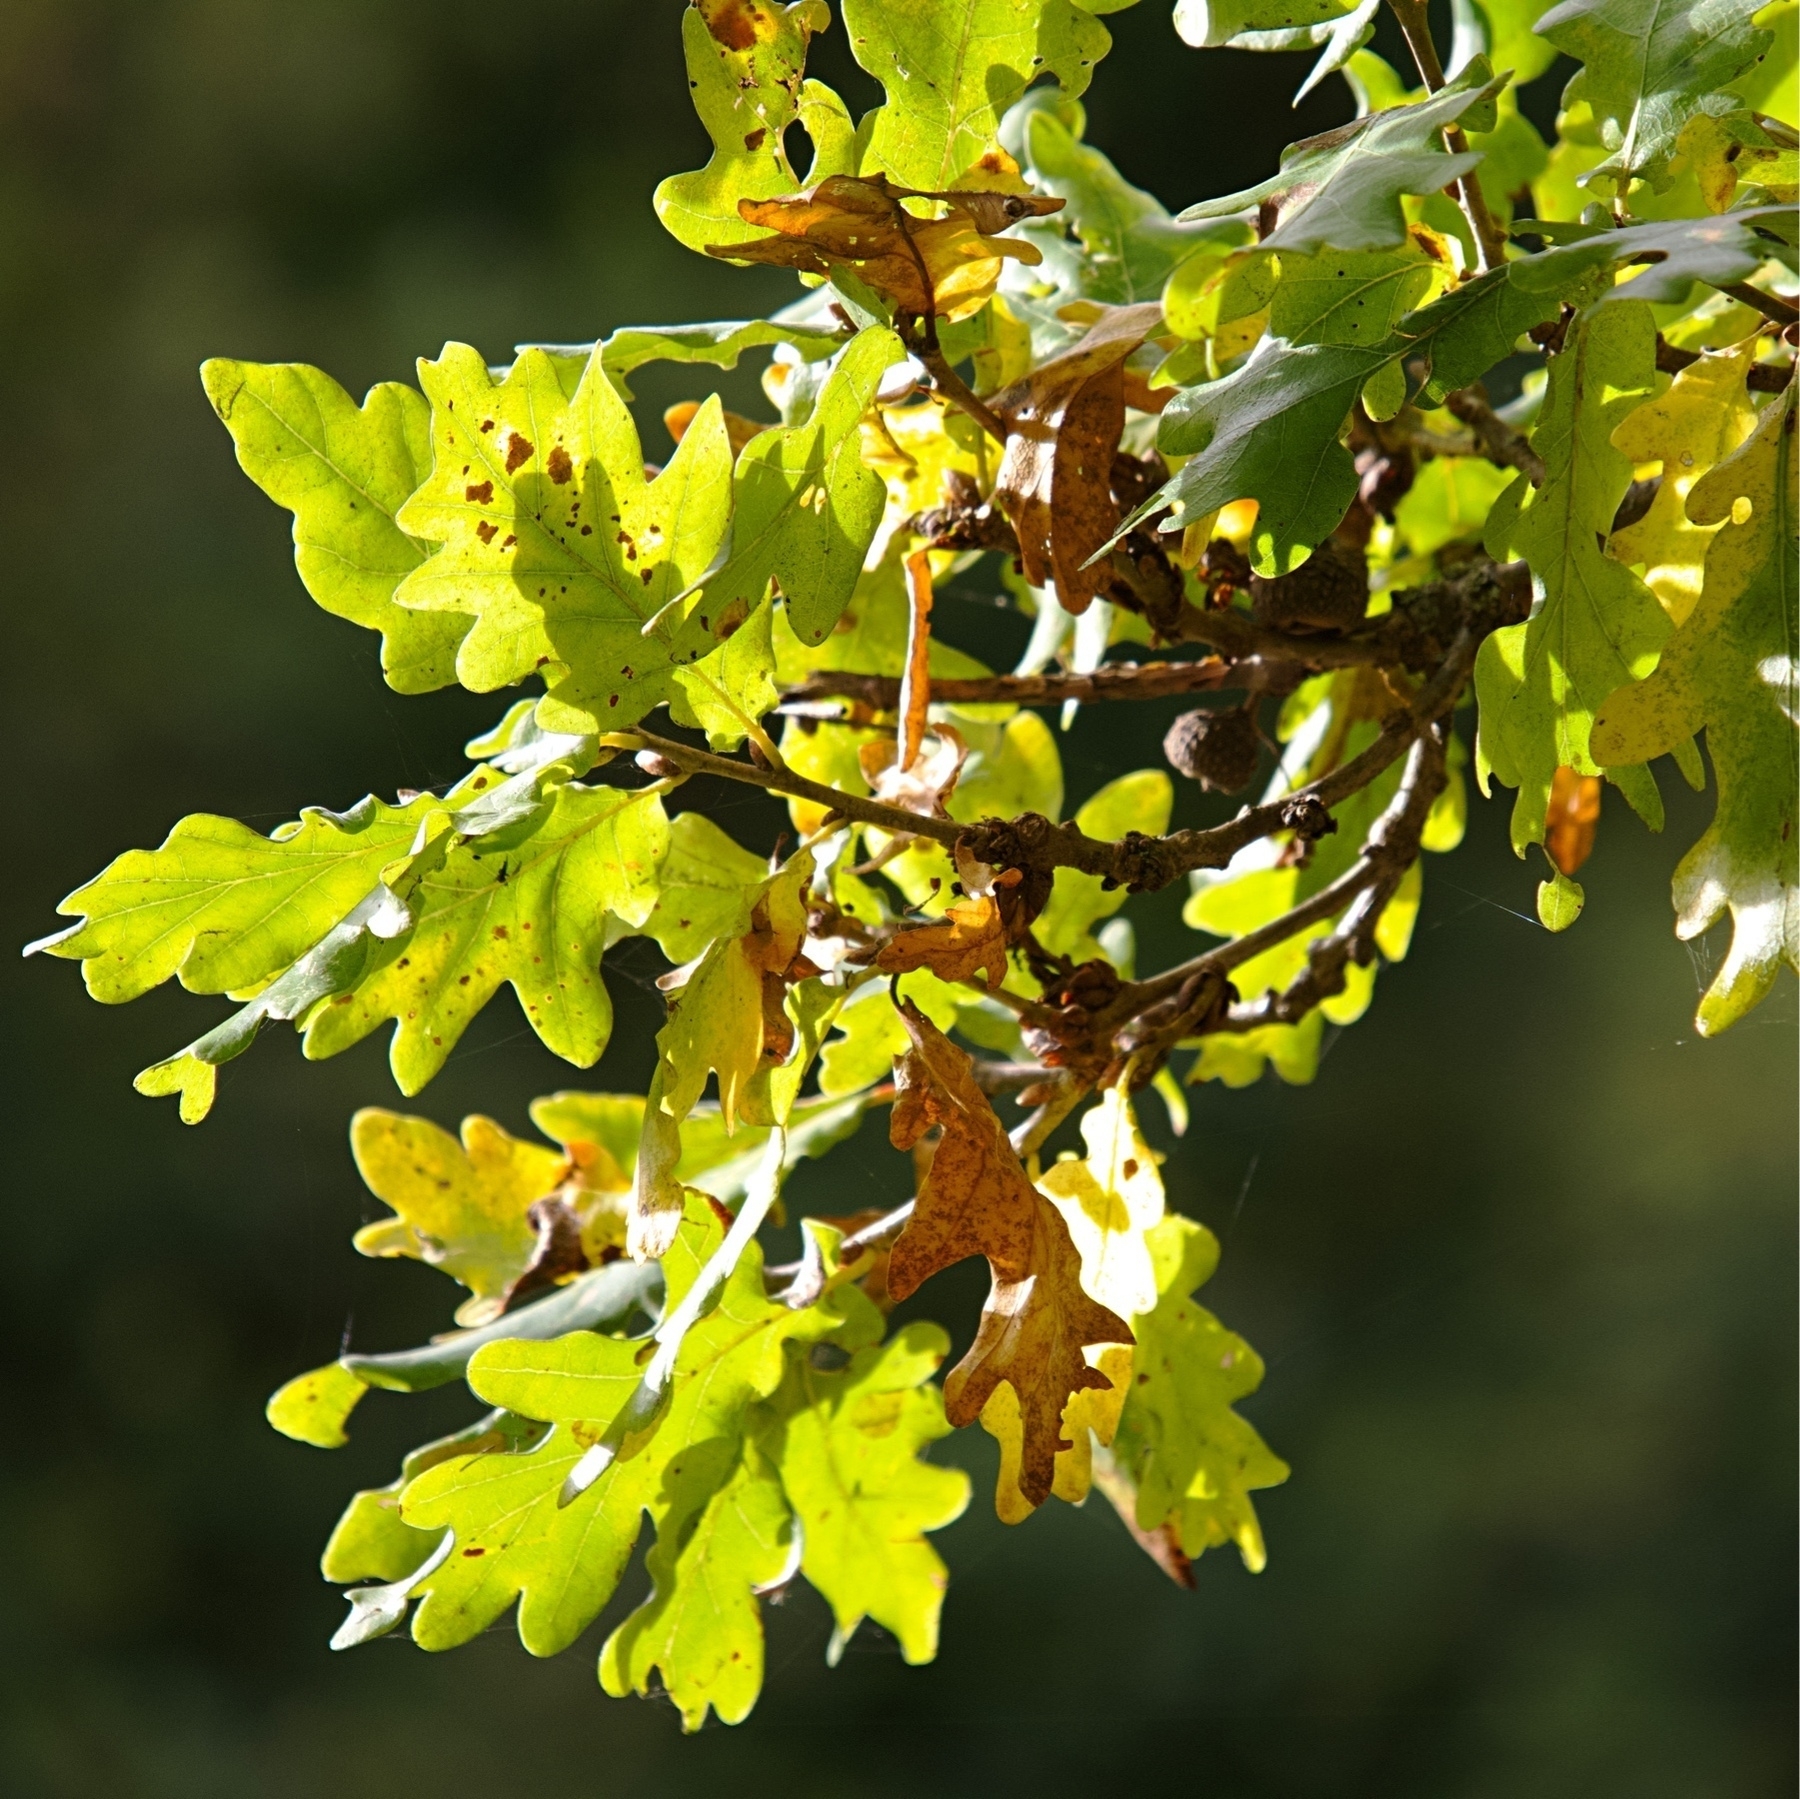 Sunlight shining through autumnal oak leaves.